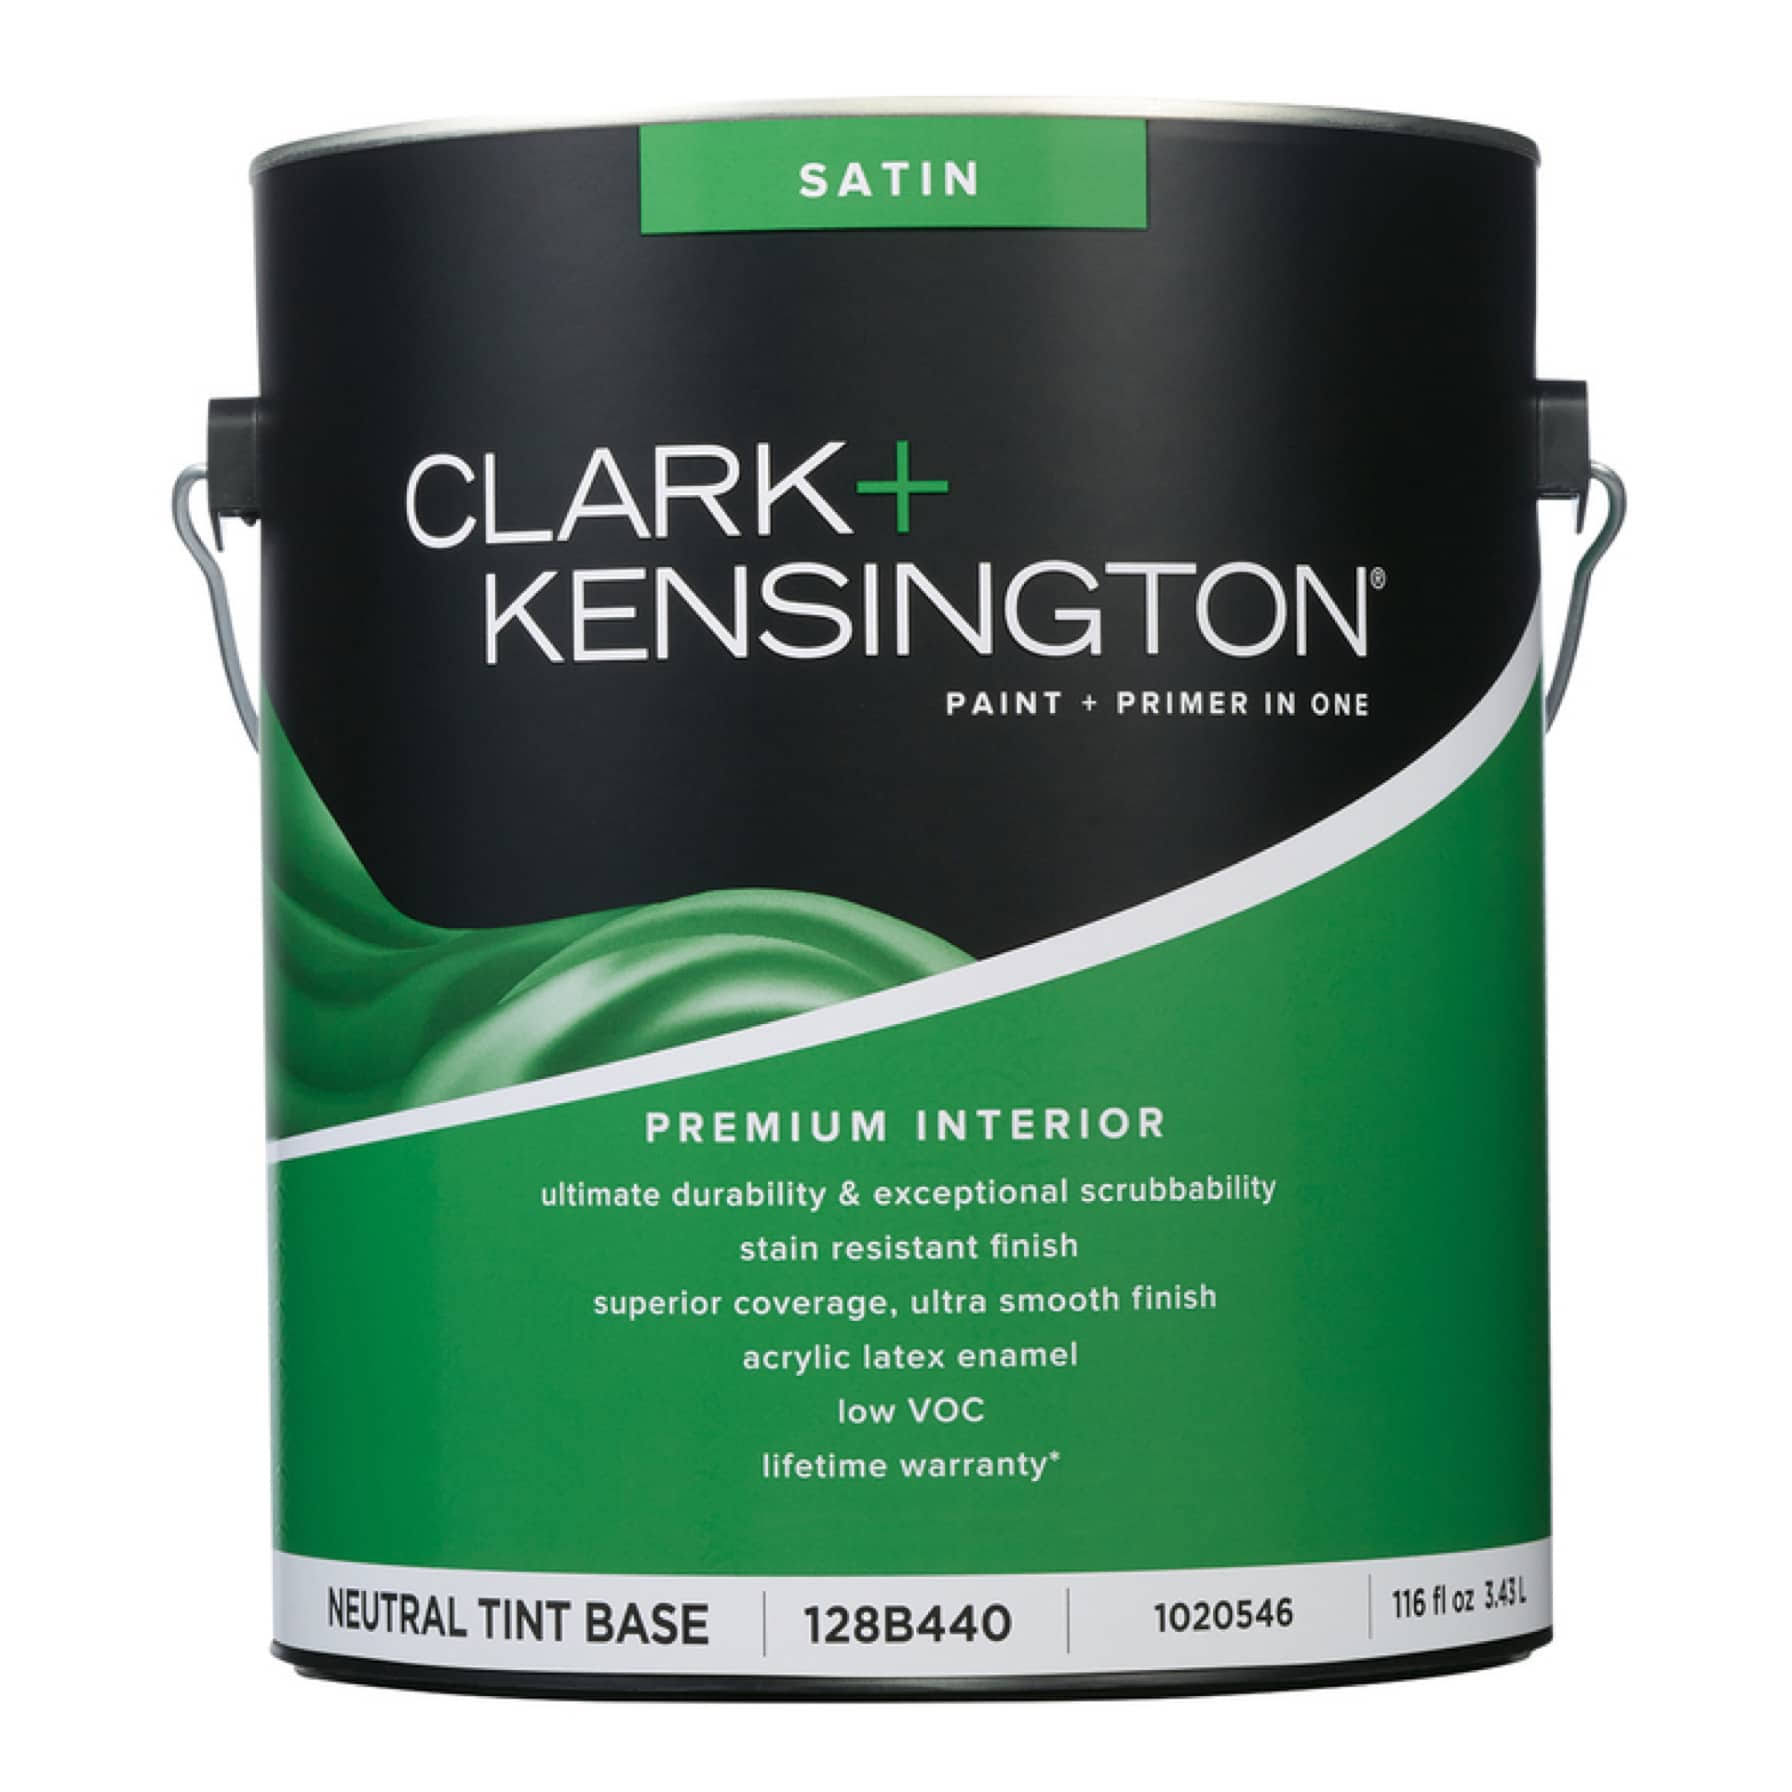 Clark+Kensington Satin Tint Base Neutral Base Premium Paint Interior 1 gal.